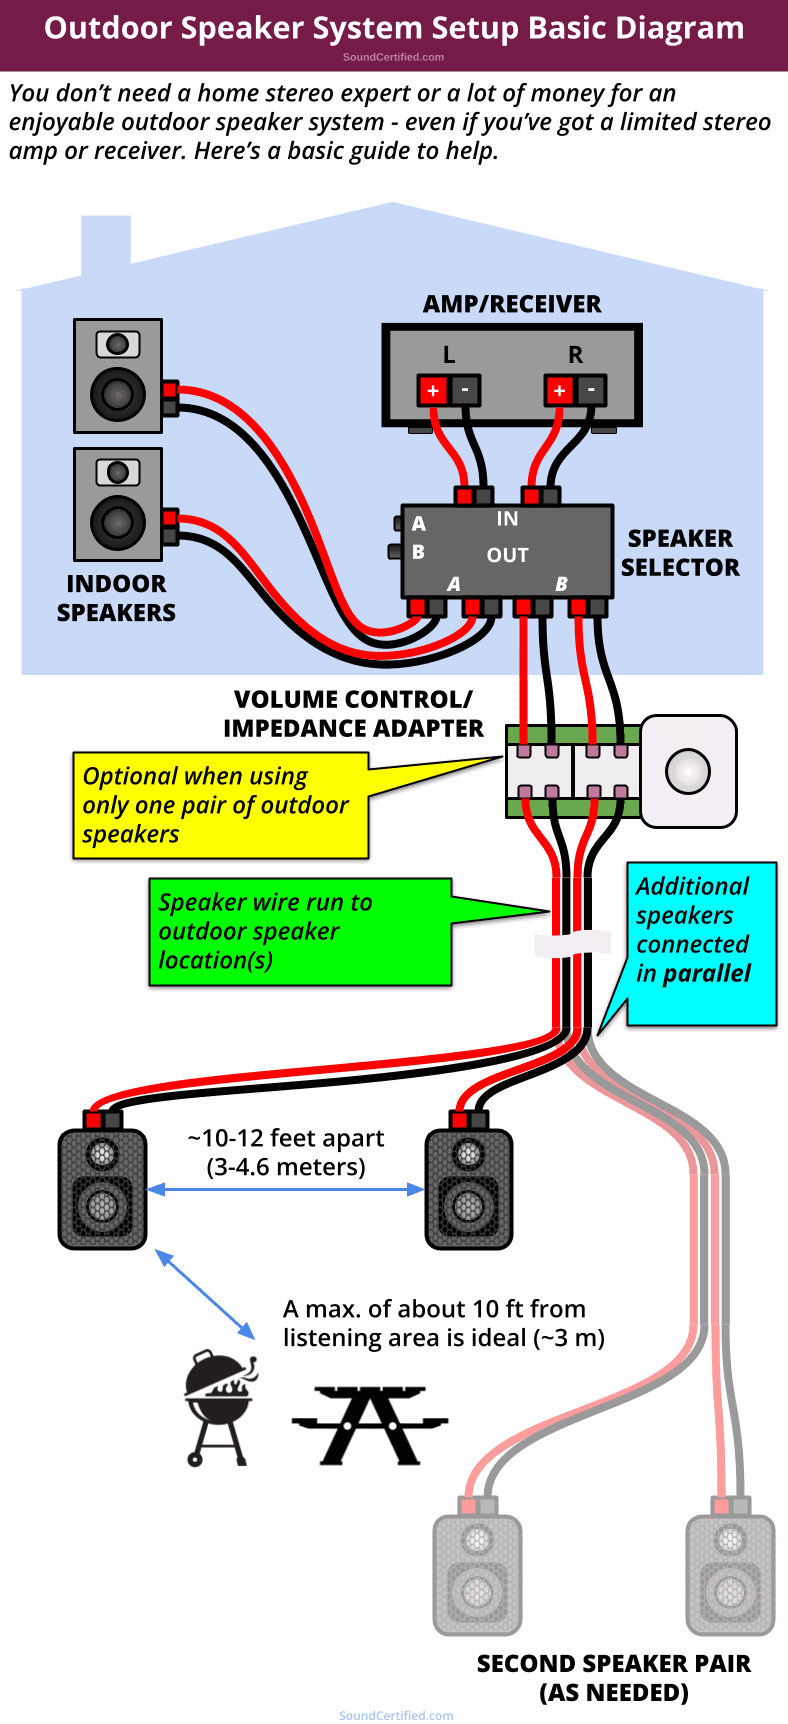 outdoor speaker system setup basic diagram